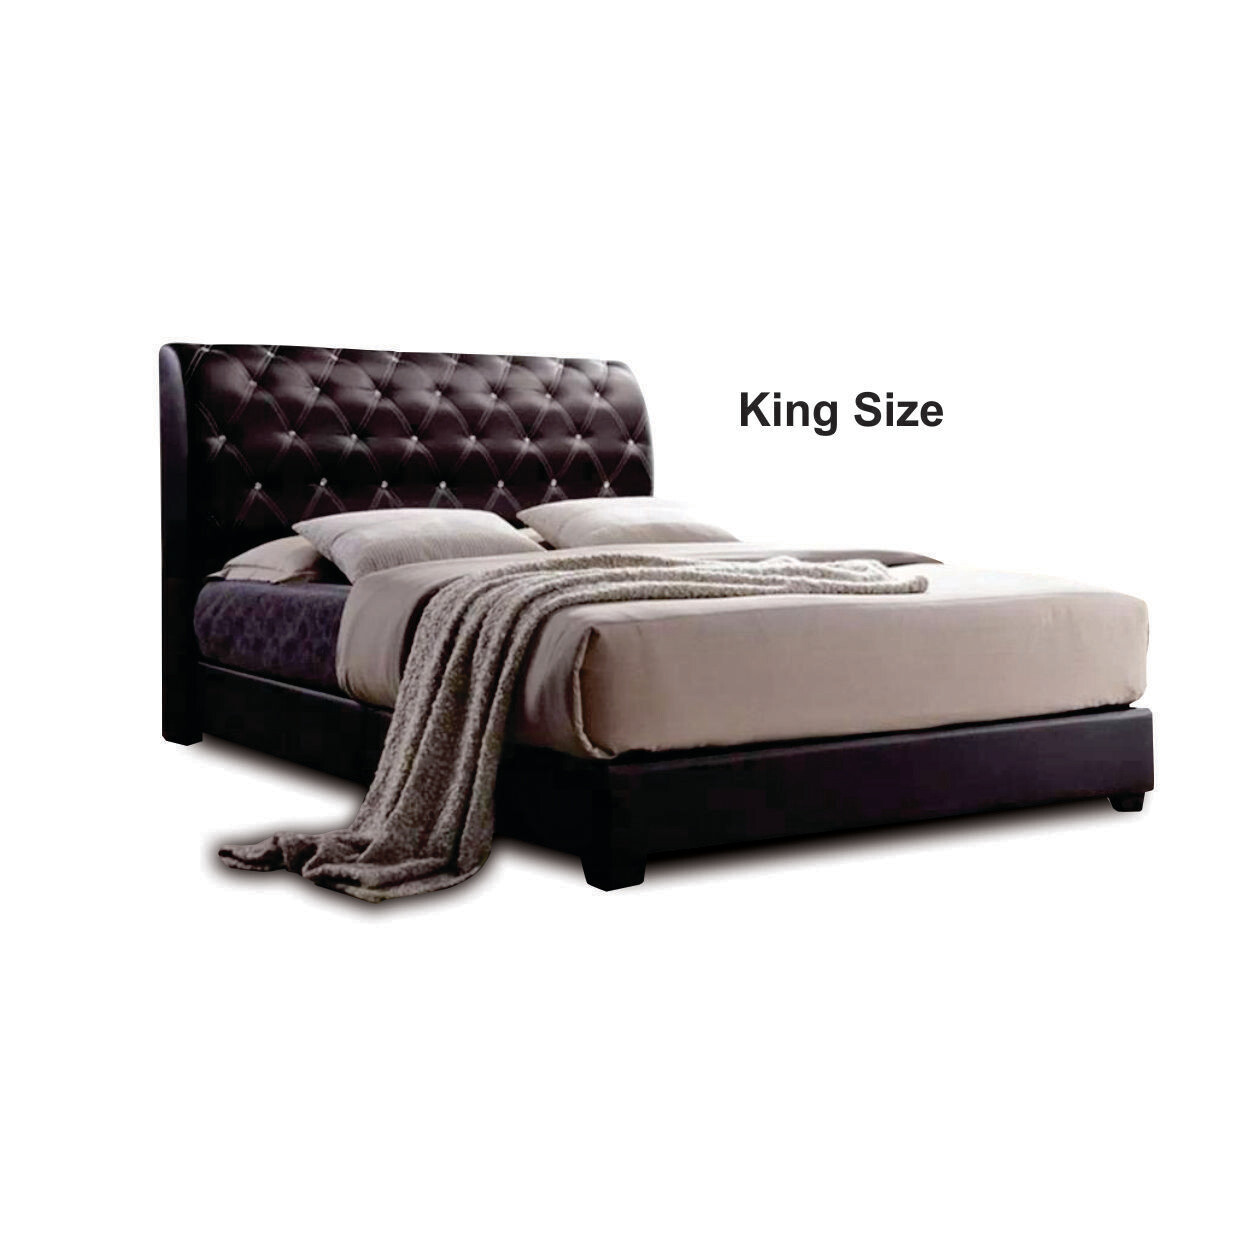 Divan Bedframe (without mattress) - King Size